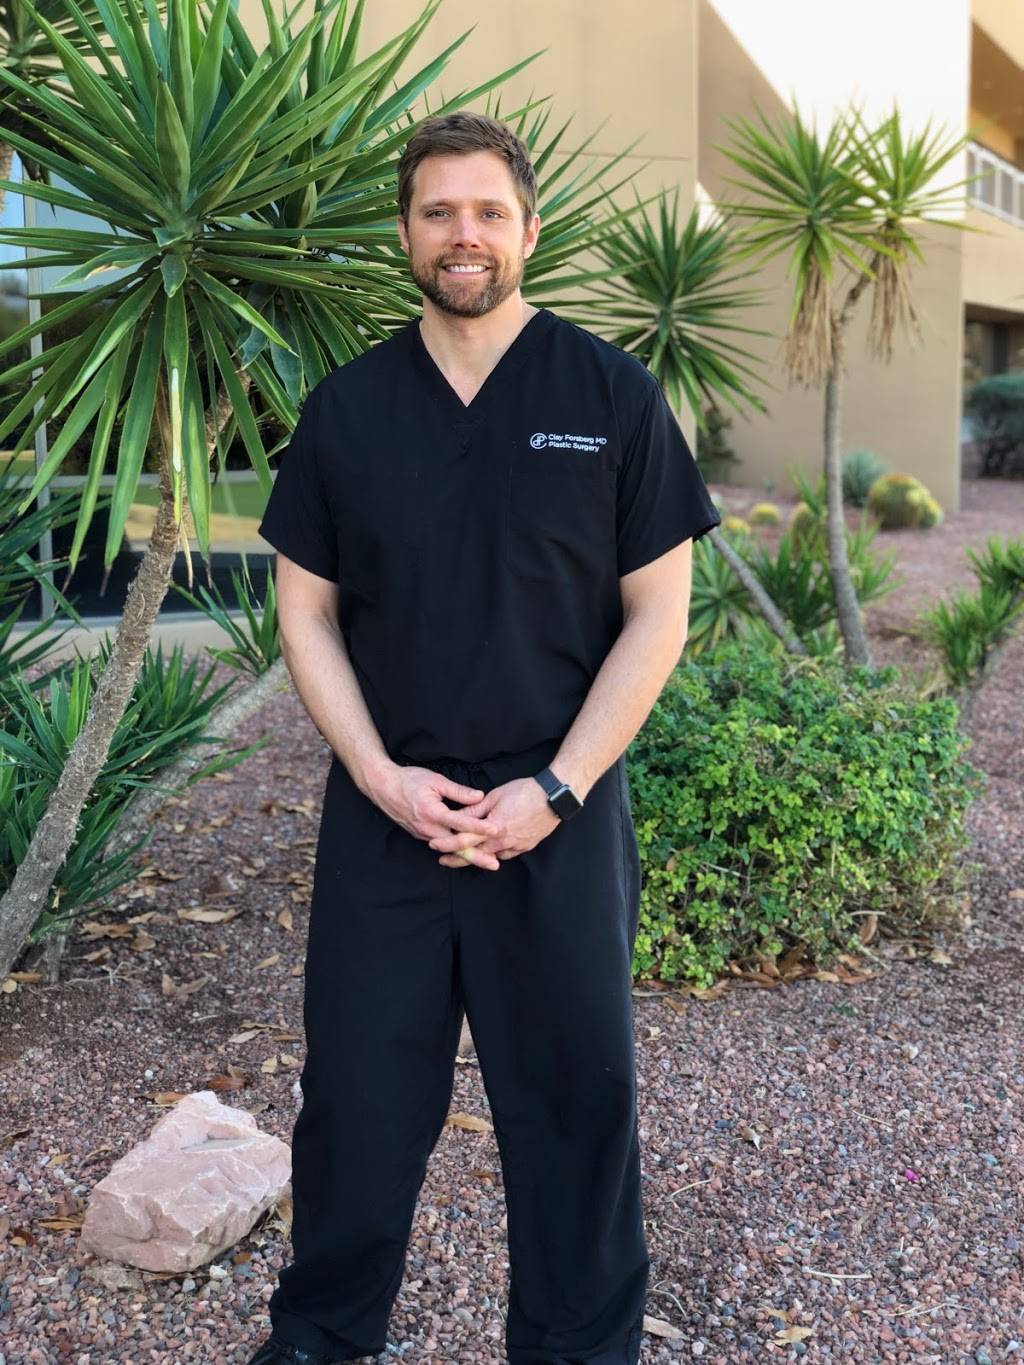 Dr. Clay Forsberg - Board Certified Plastic Surgeon in Arizona | 14275 N 87th St #110, Scottsdale, AZ 85260 | Phone: (480) 223-9500